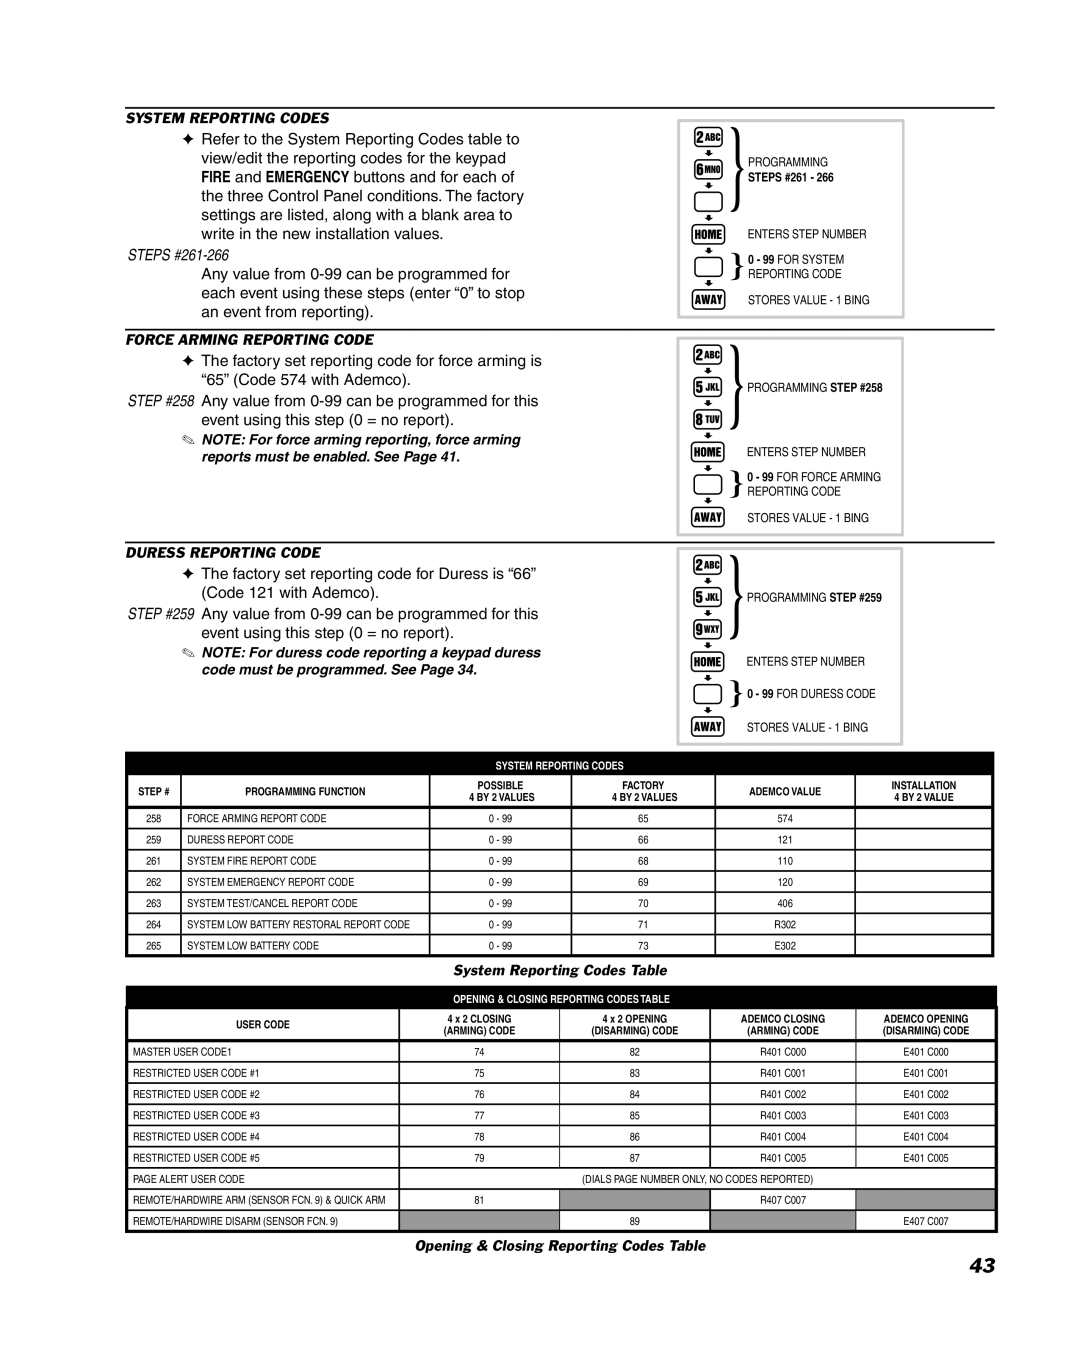 Linear DUAL 824 manual Force Arming Reporting Code, Duress Reporting Code, System Reporting Codes Table 